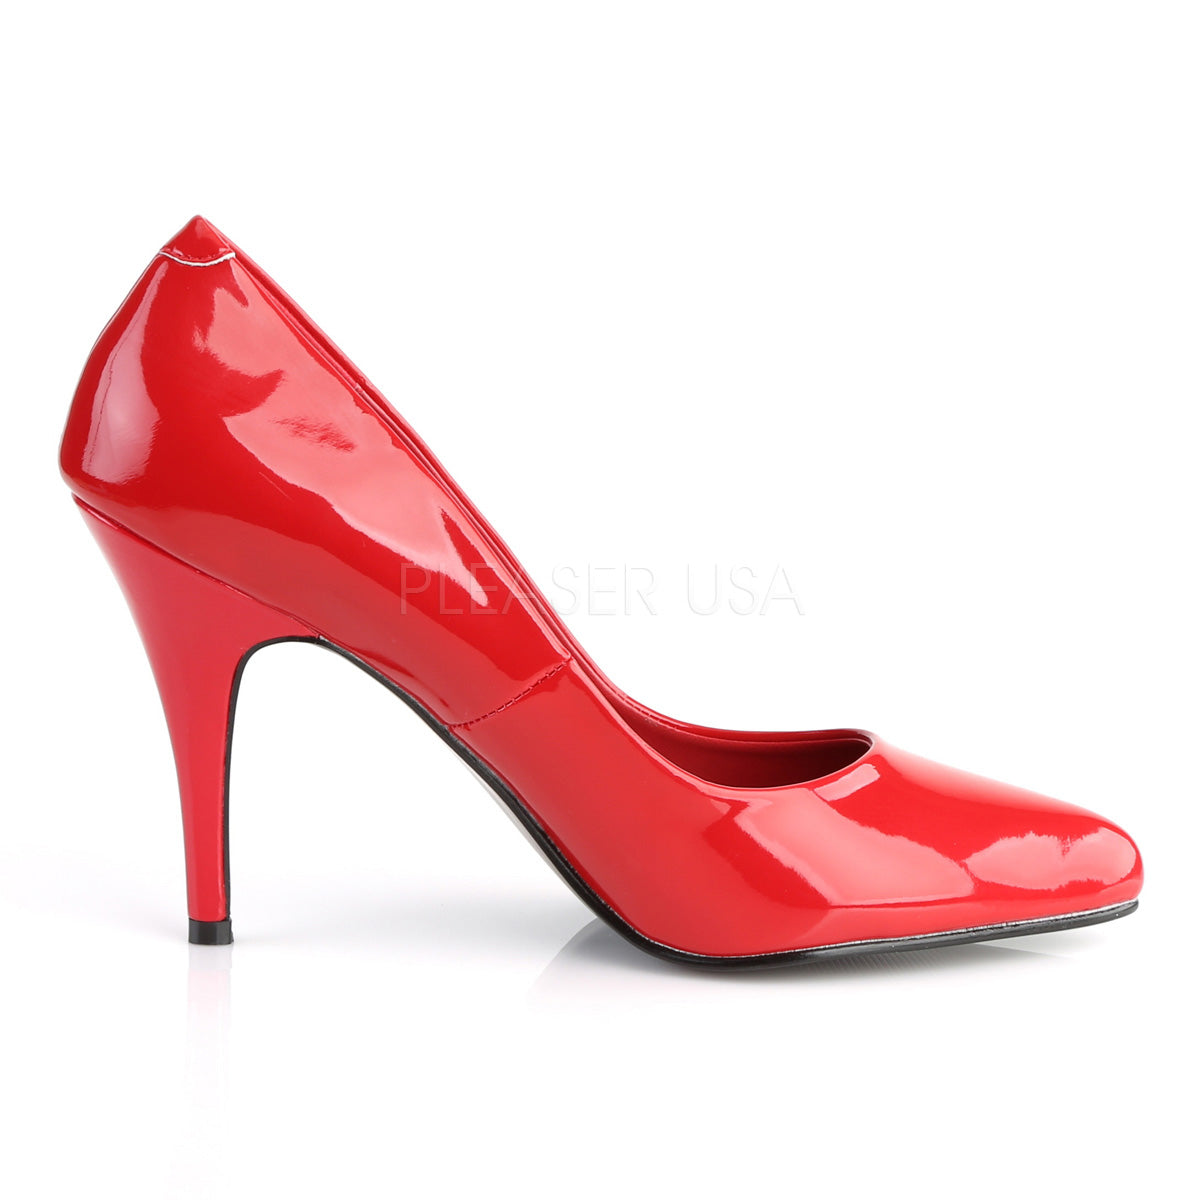 Vanity Red Heels